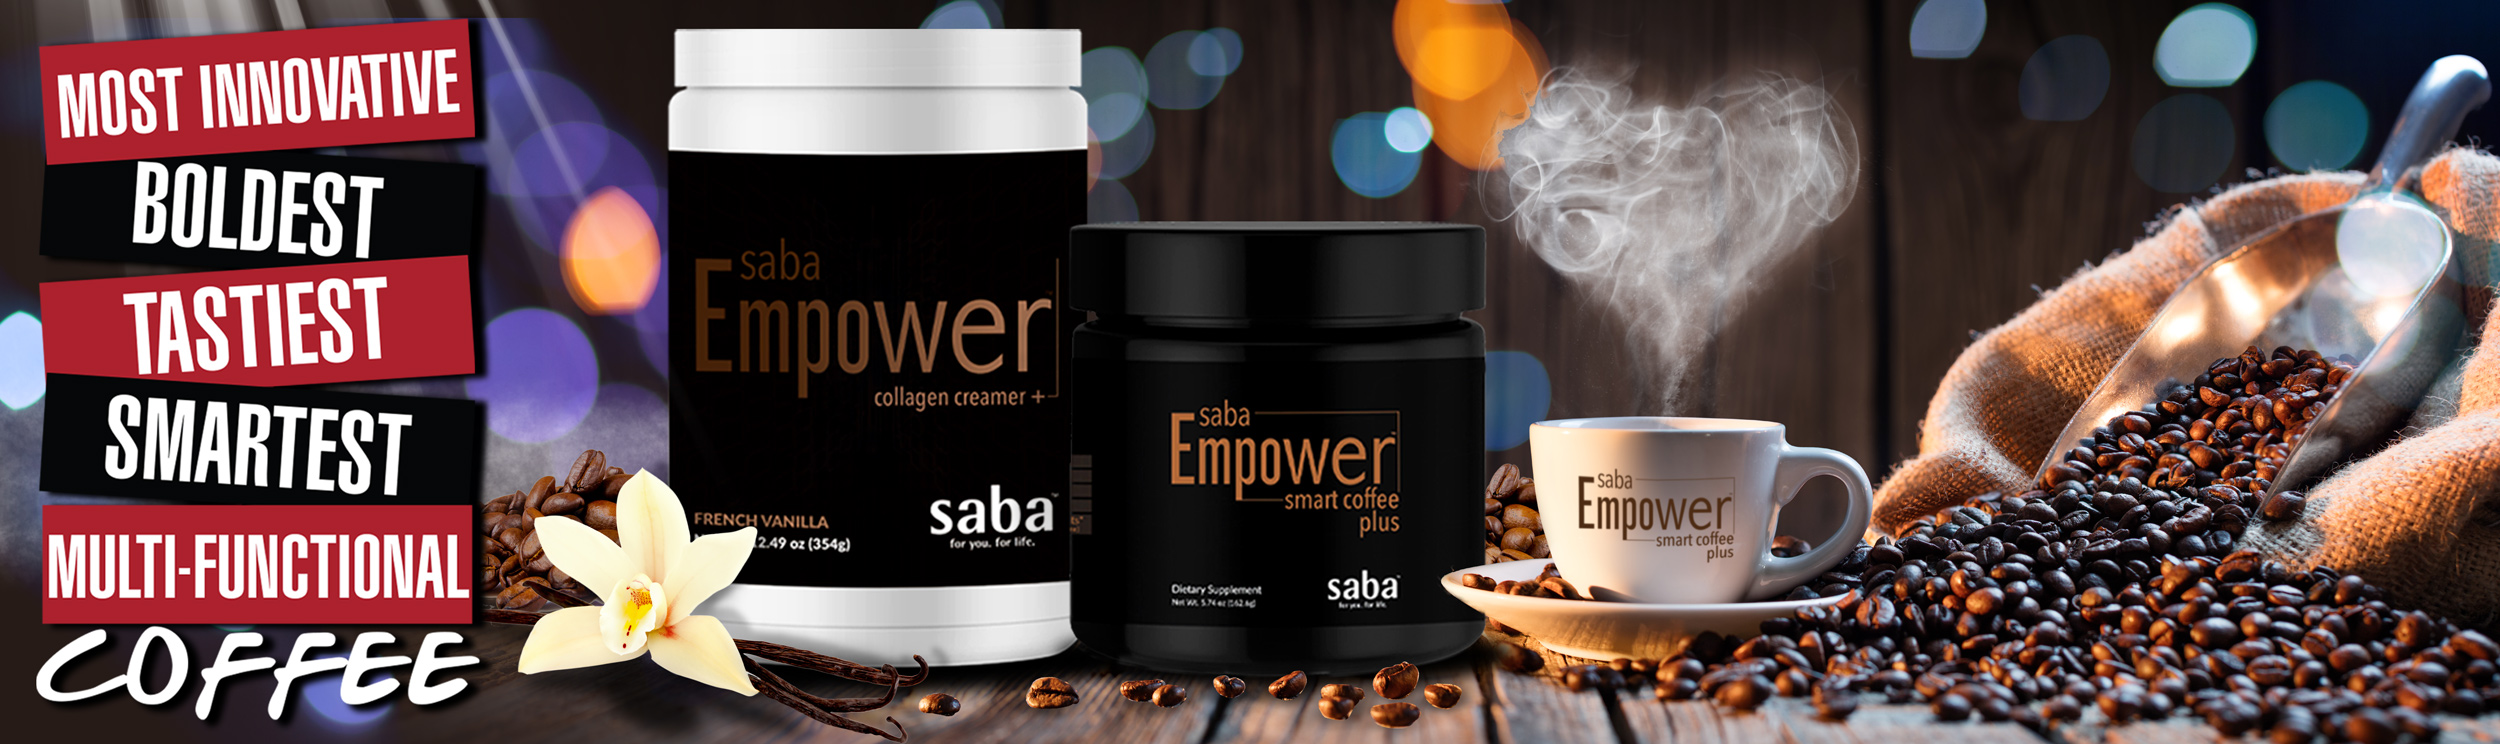 2 saba empower smart coffee plus fo 02 2500x744